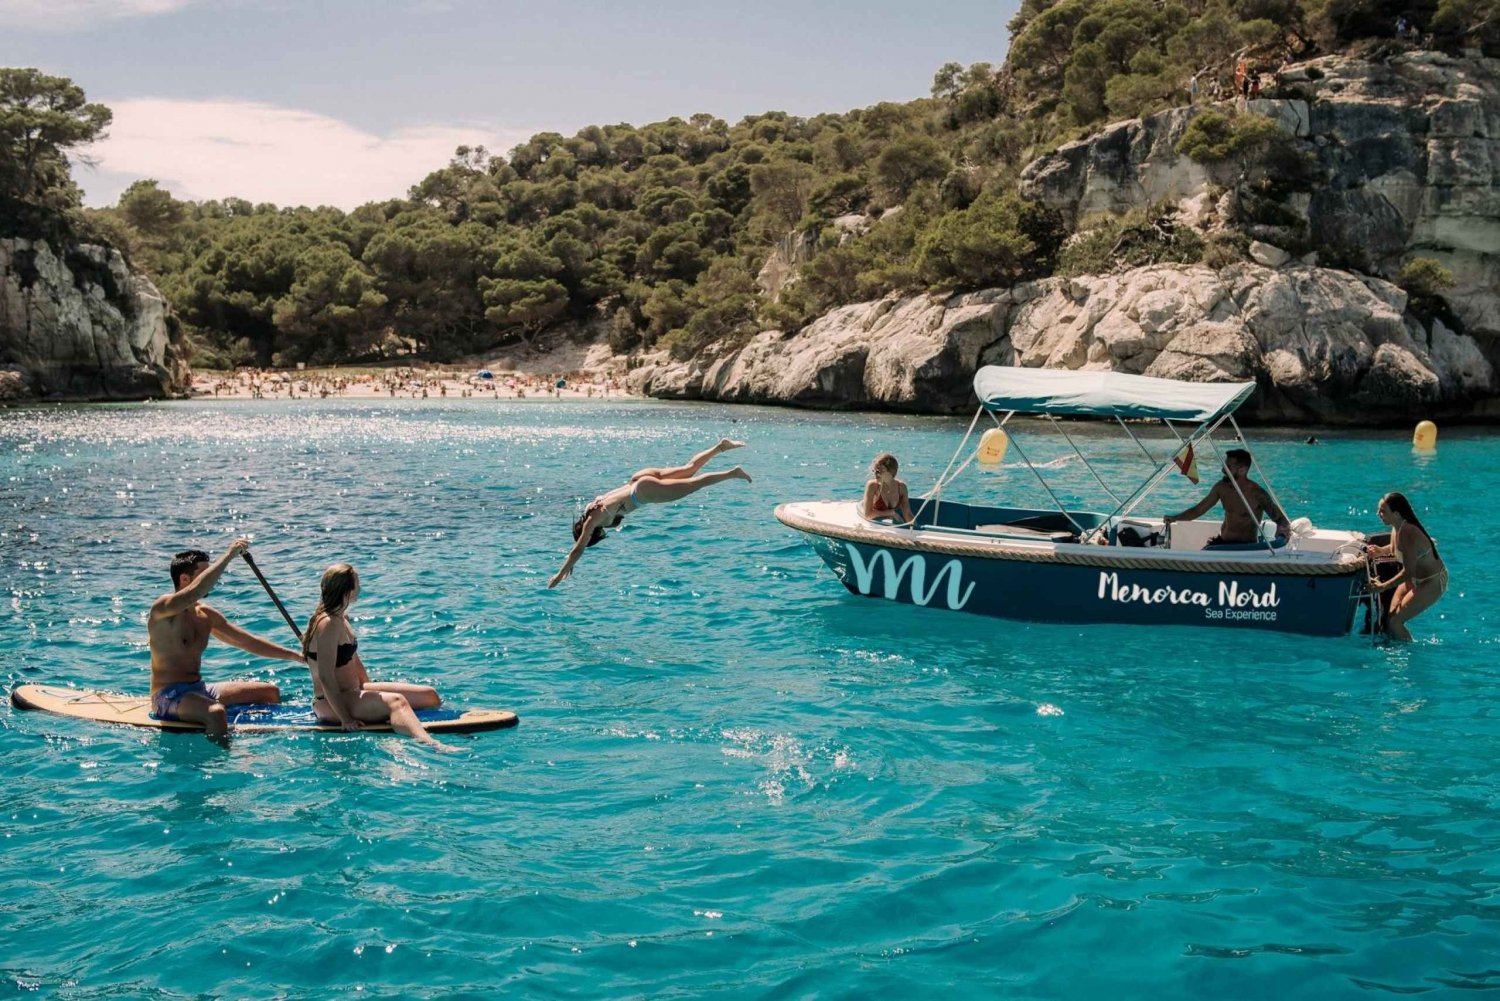 Menorca: Privat bådudlejning uden obligatorisk licens